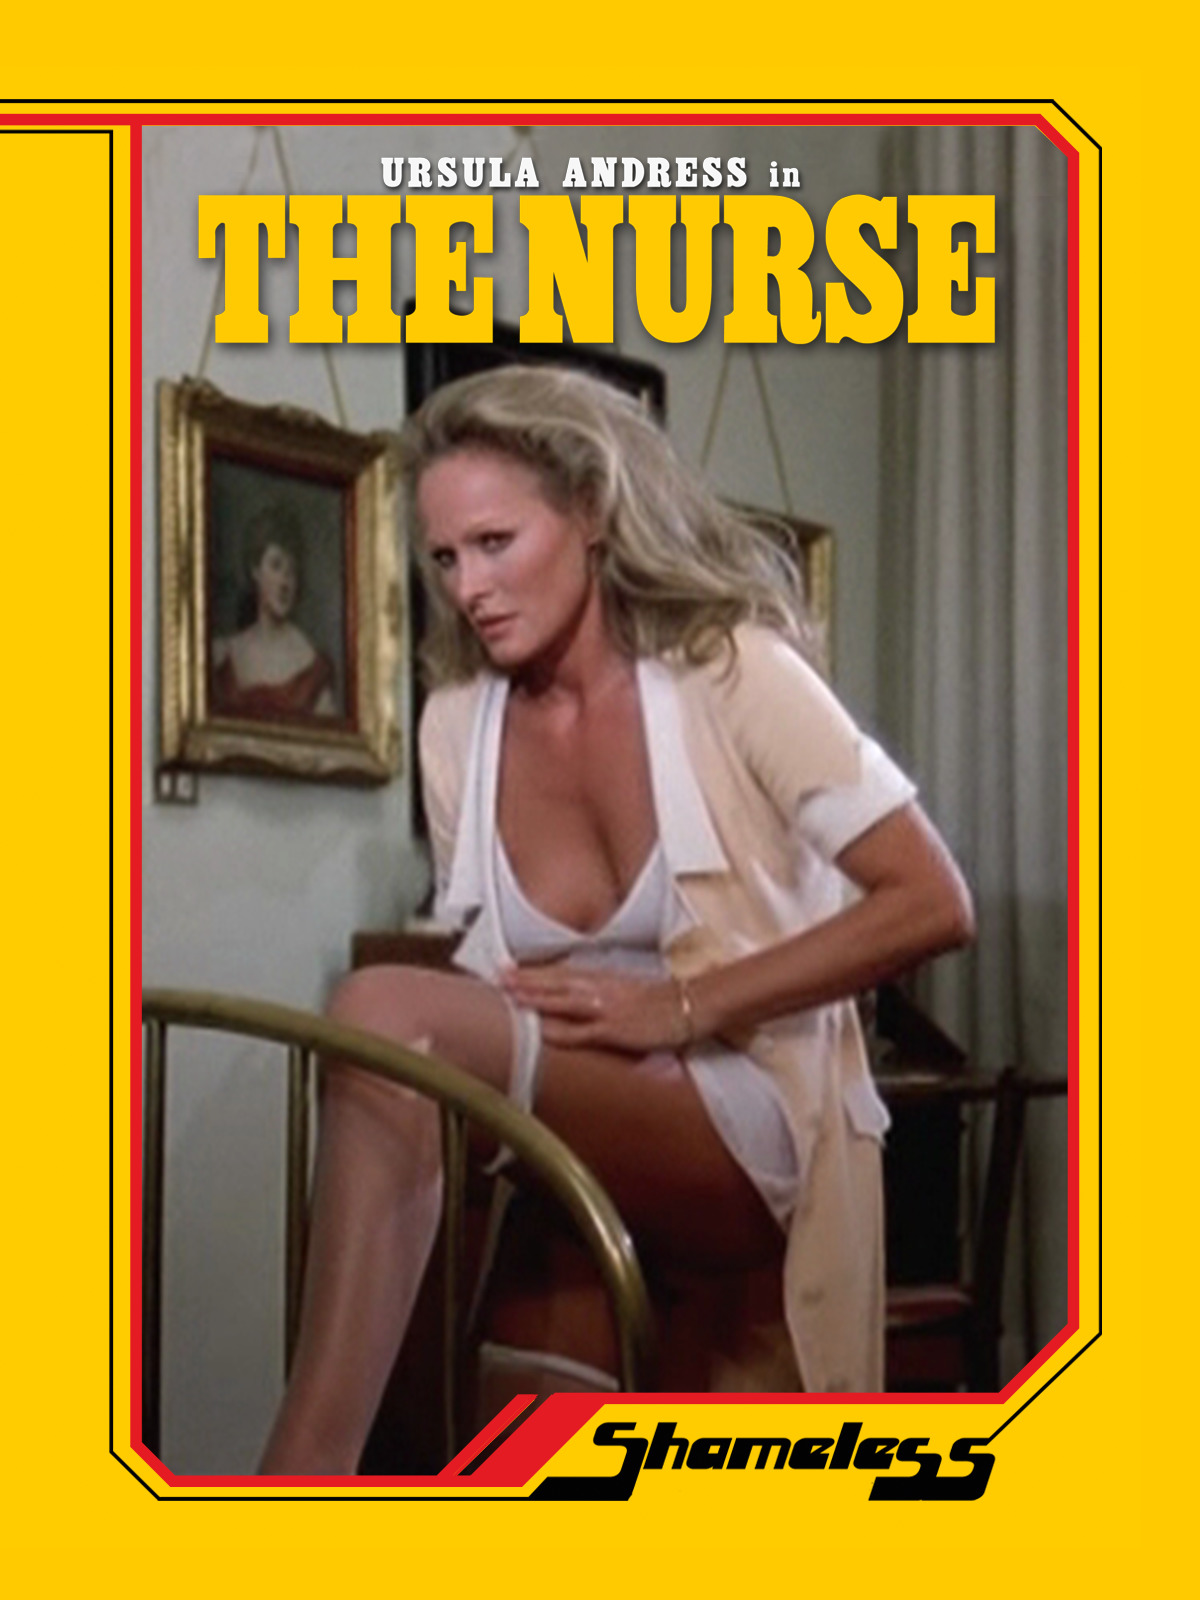 david smoak recommends Ursula Andress The Sensuous Nurse